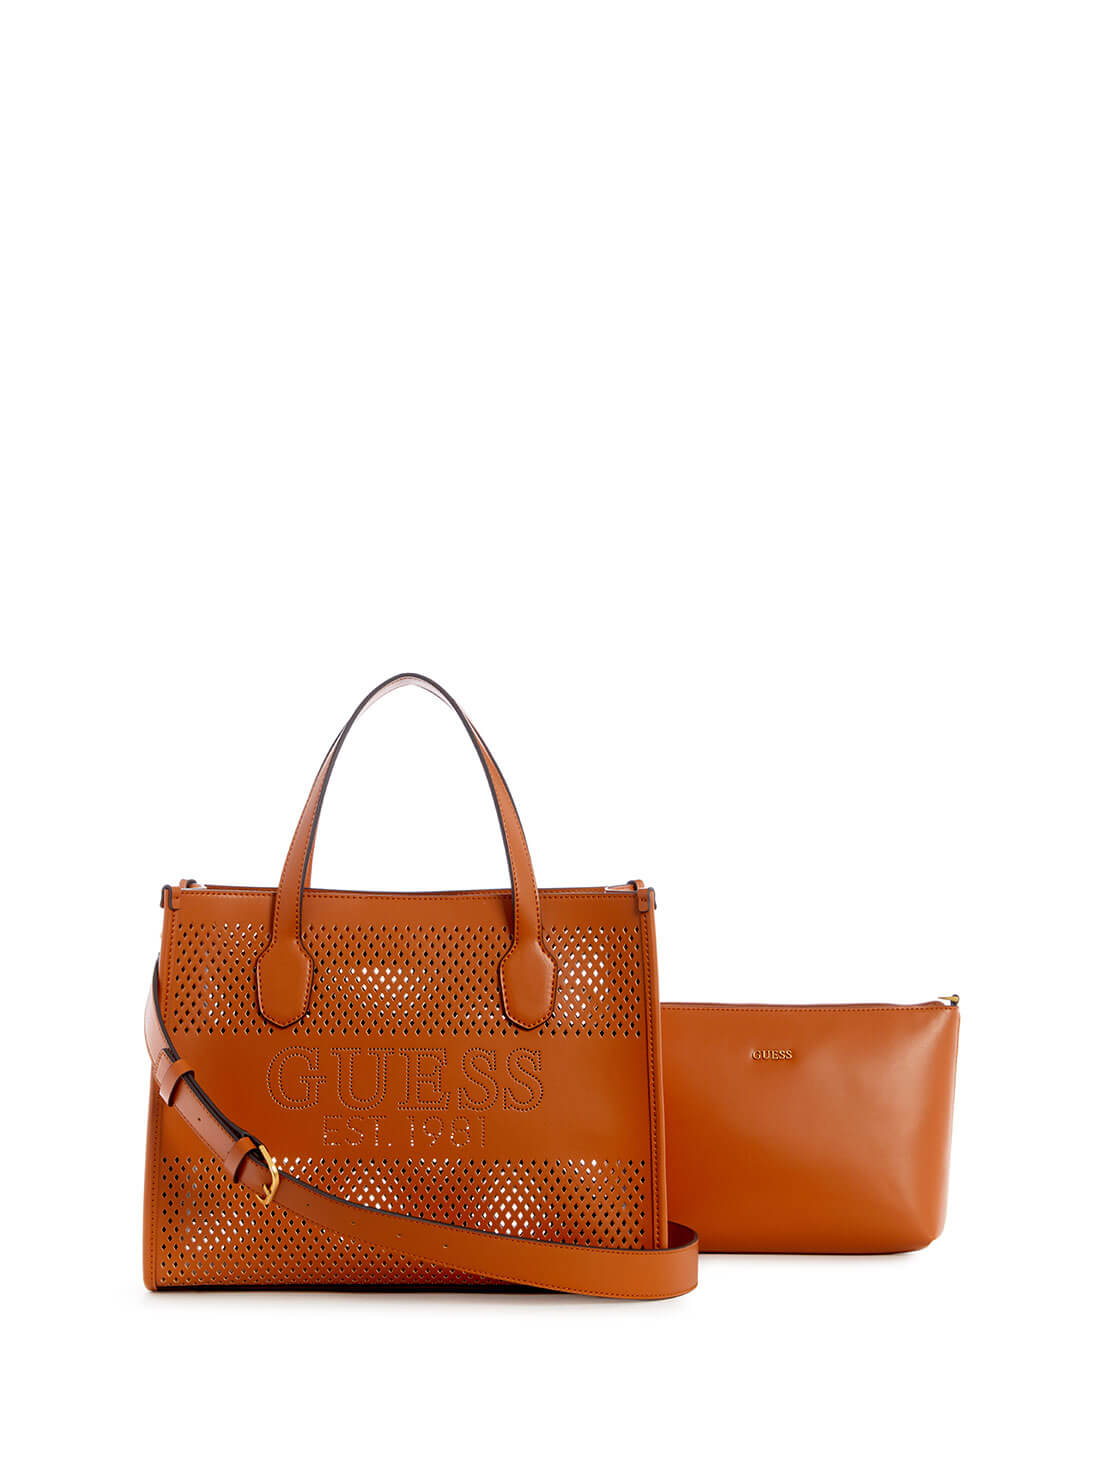 Cognac Brown Katey Small Tote Bag | GUESS Women's Handbags | front view alt